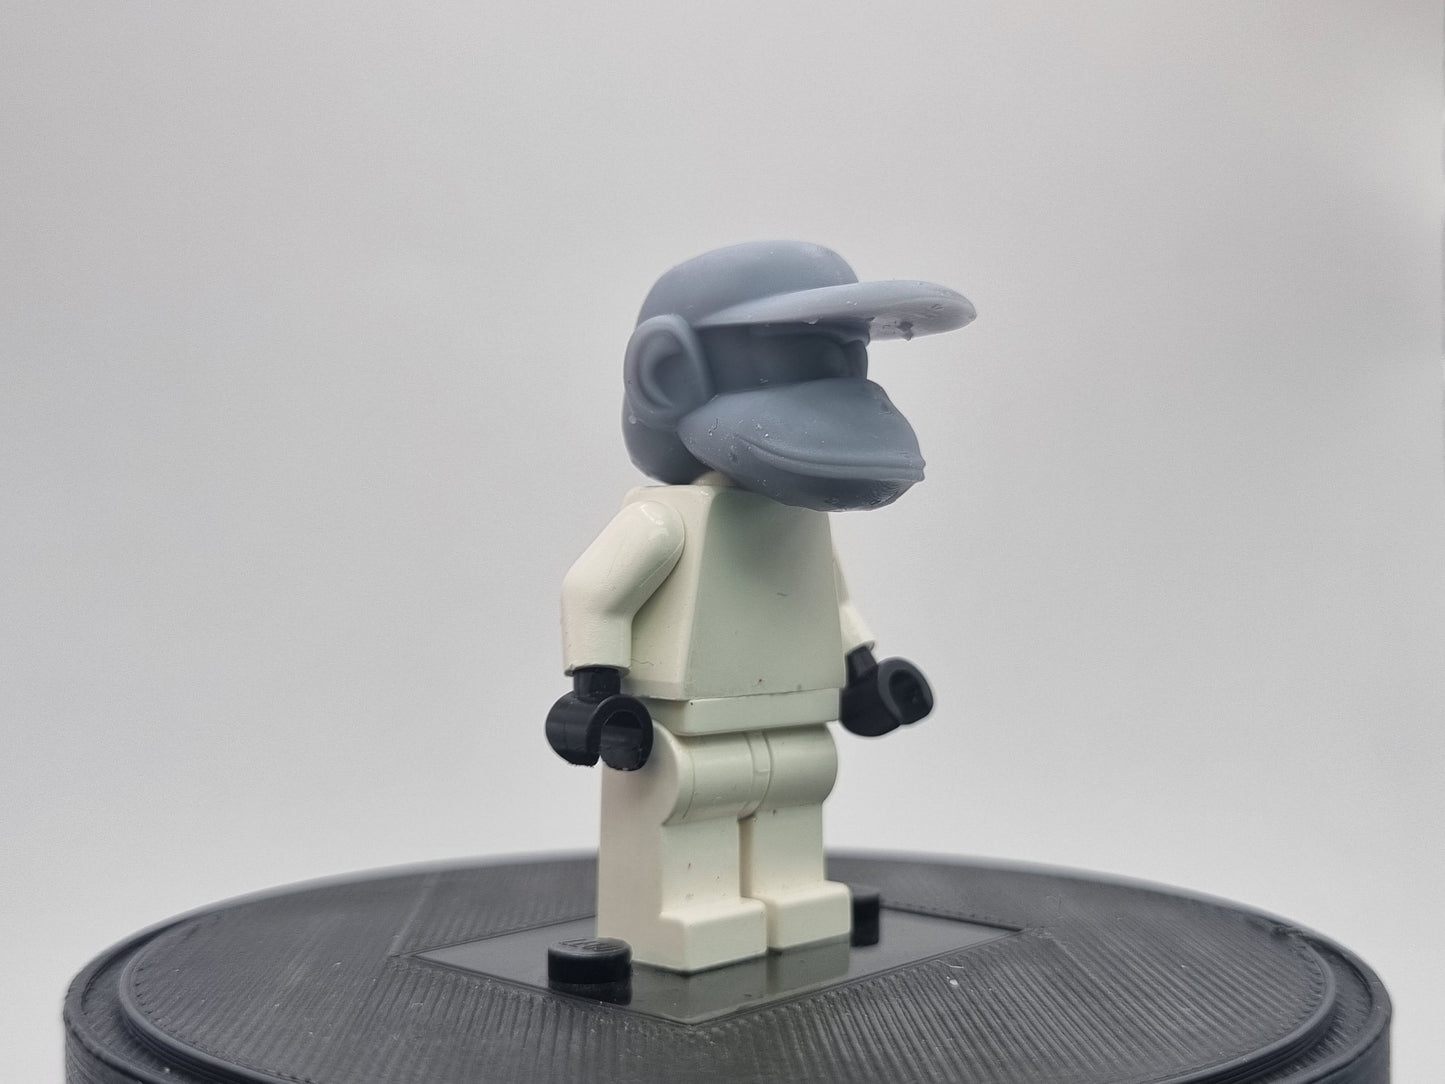 Building toy custom 3D printed monkey head!